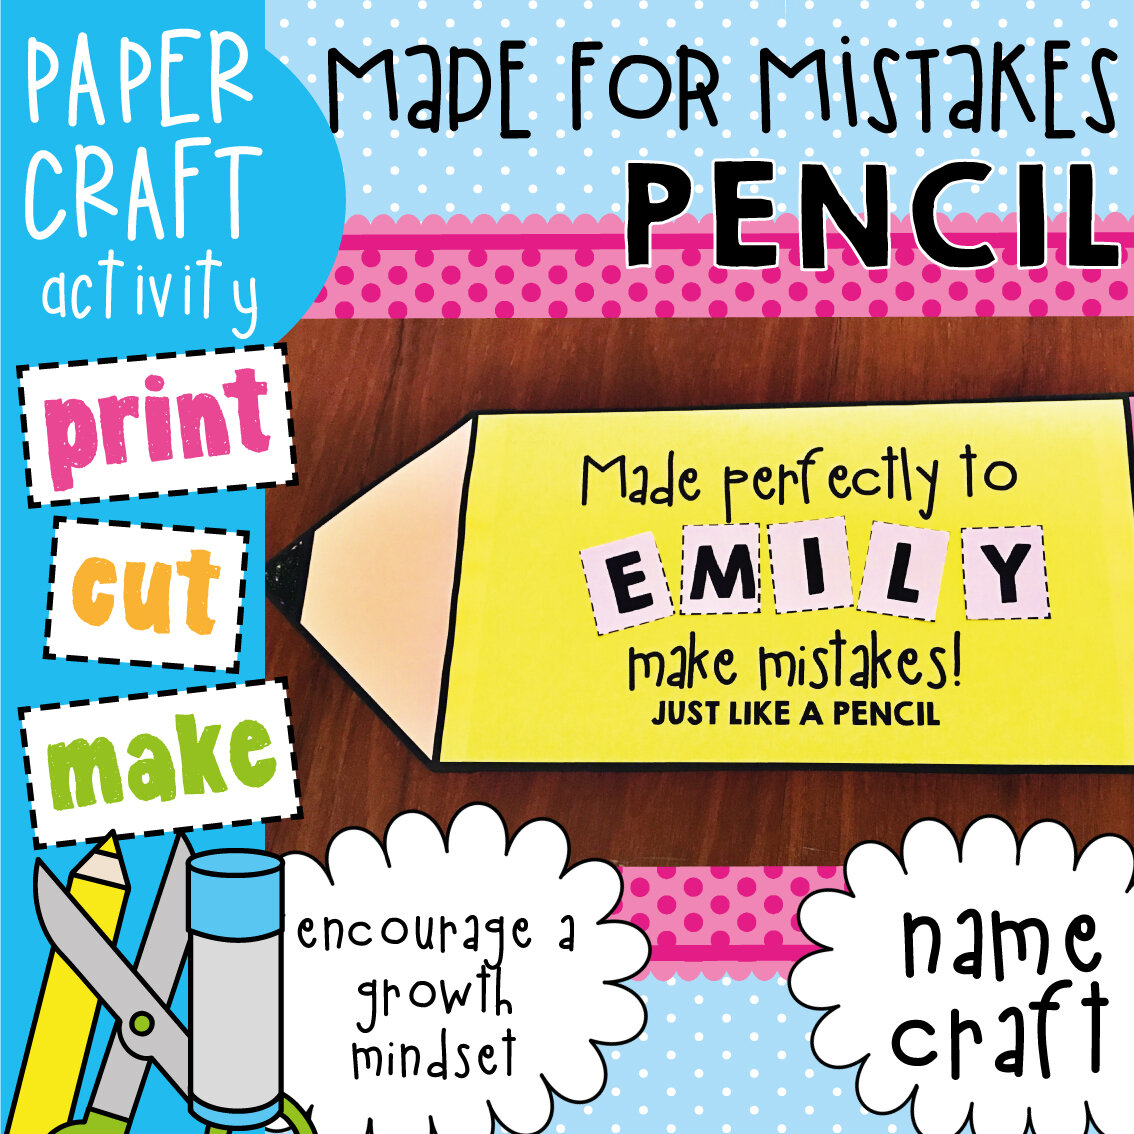 mistakes-pencil-craft.jpg